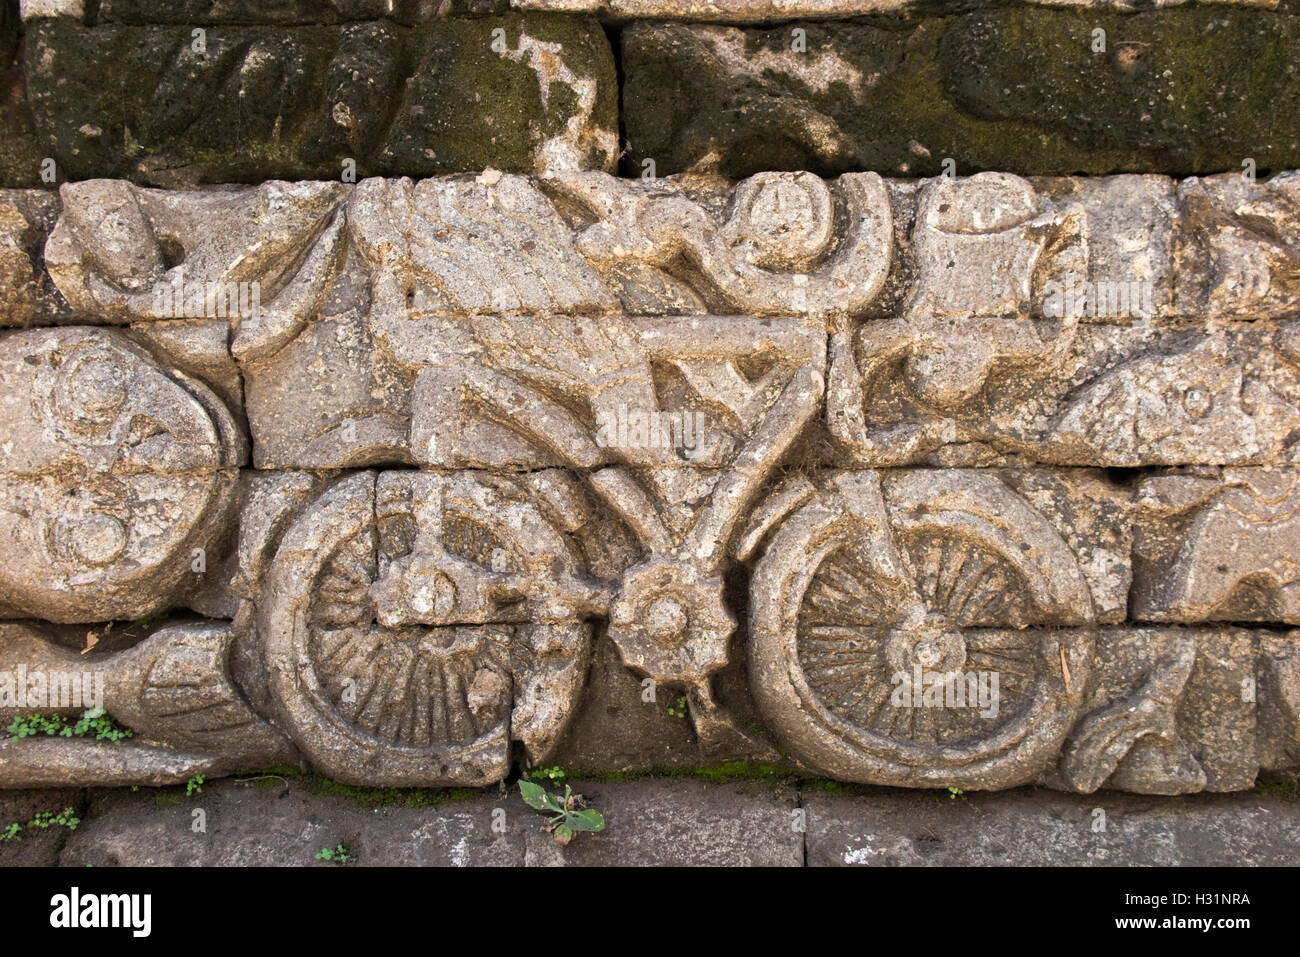 Indonesia, Bali, Sawan, Jagaraga, Pura Dalem temple, exterior carved relief image of bicycle Stock Photo